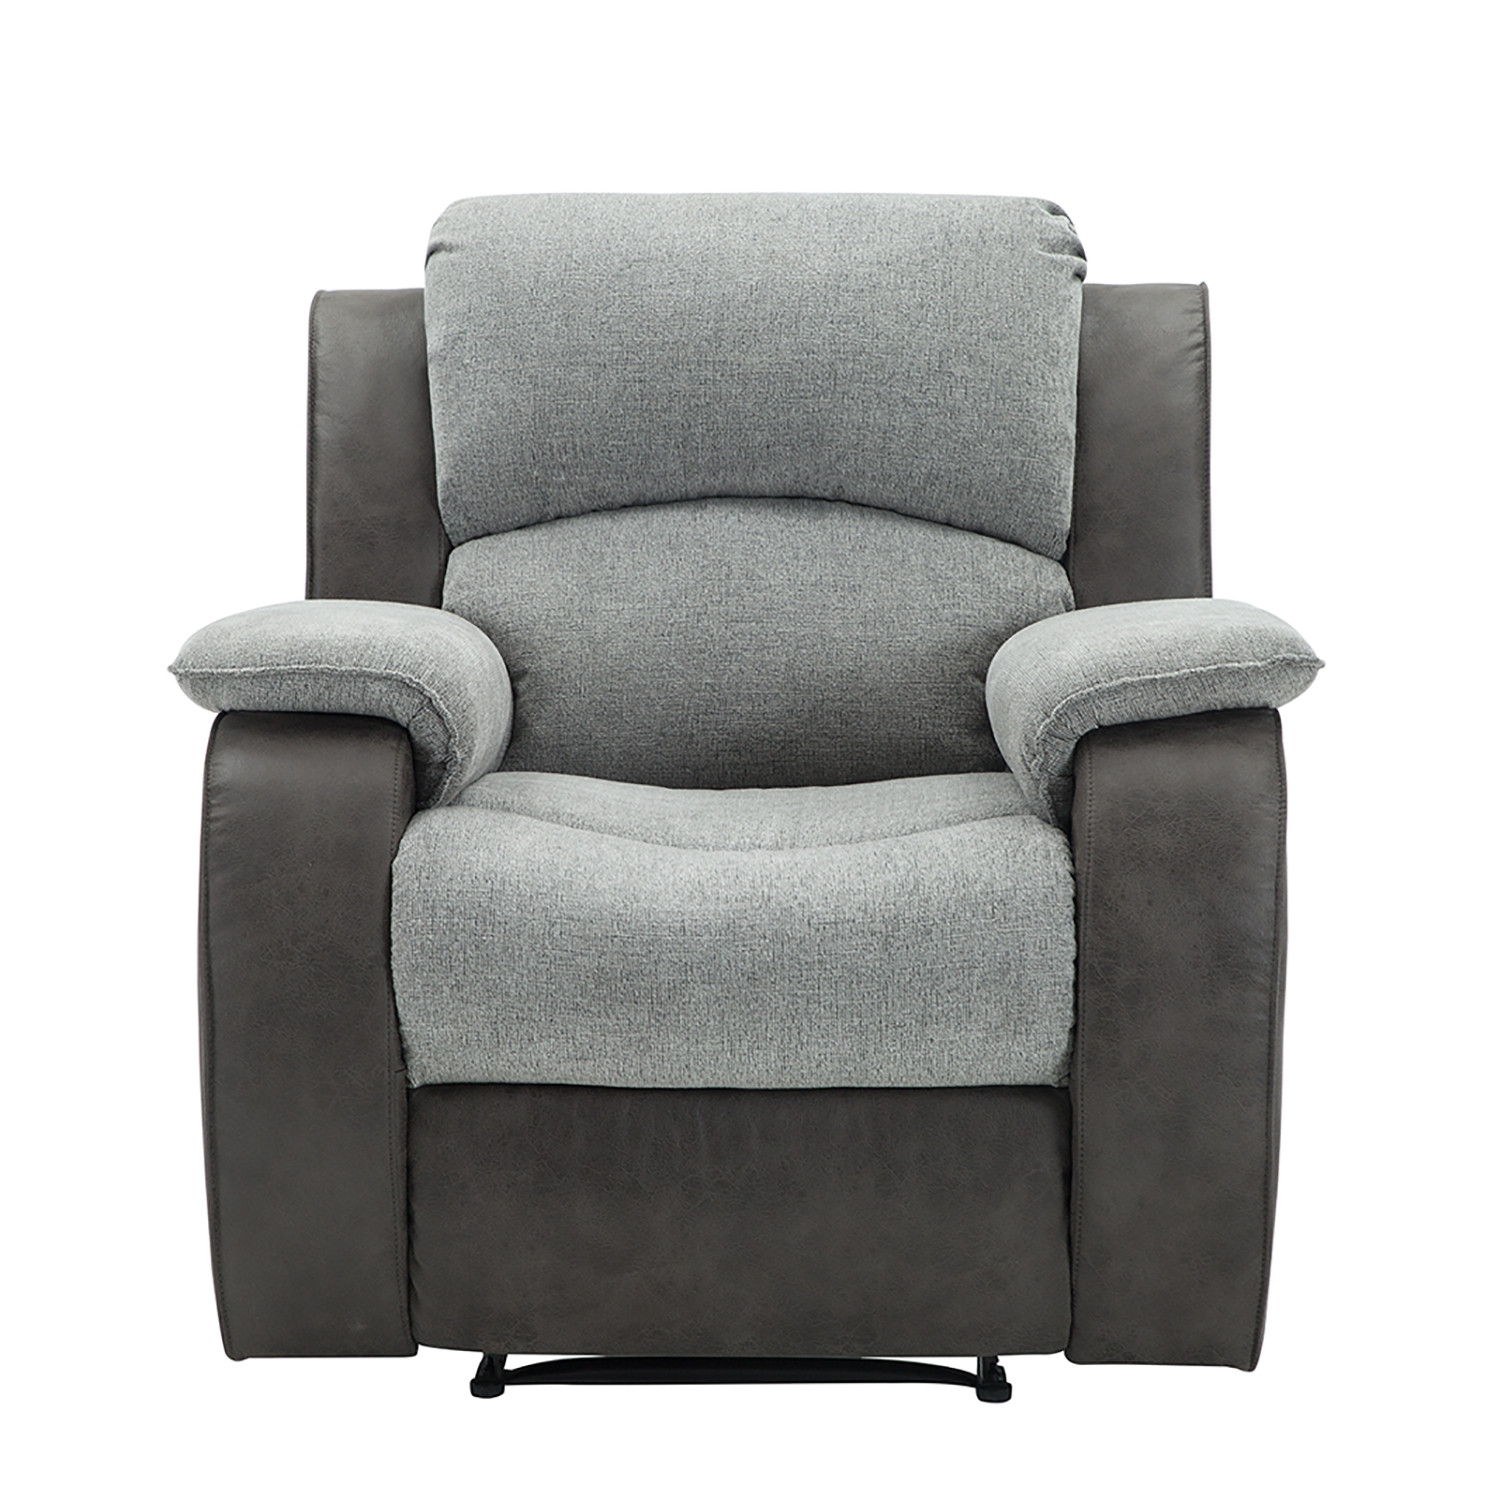 New Charleston Grey Fabric Manual Recliner Chair Image 2